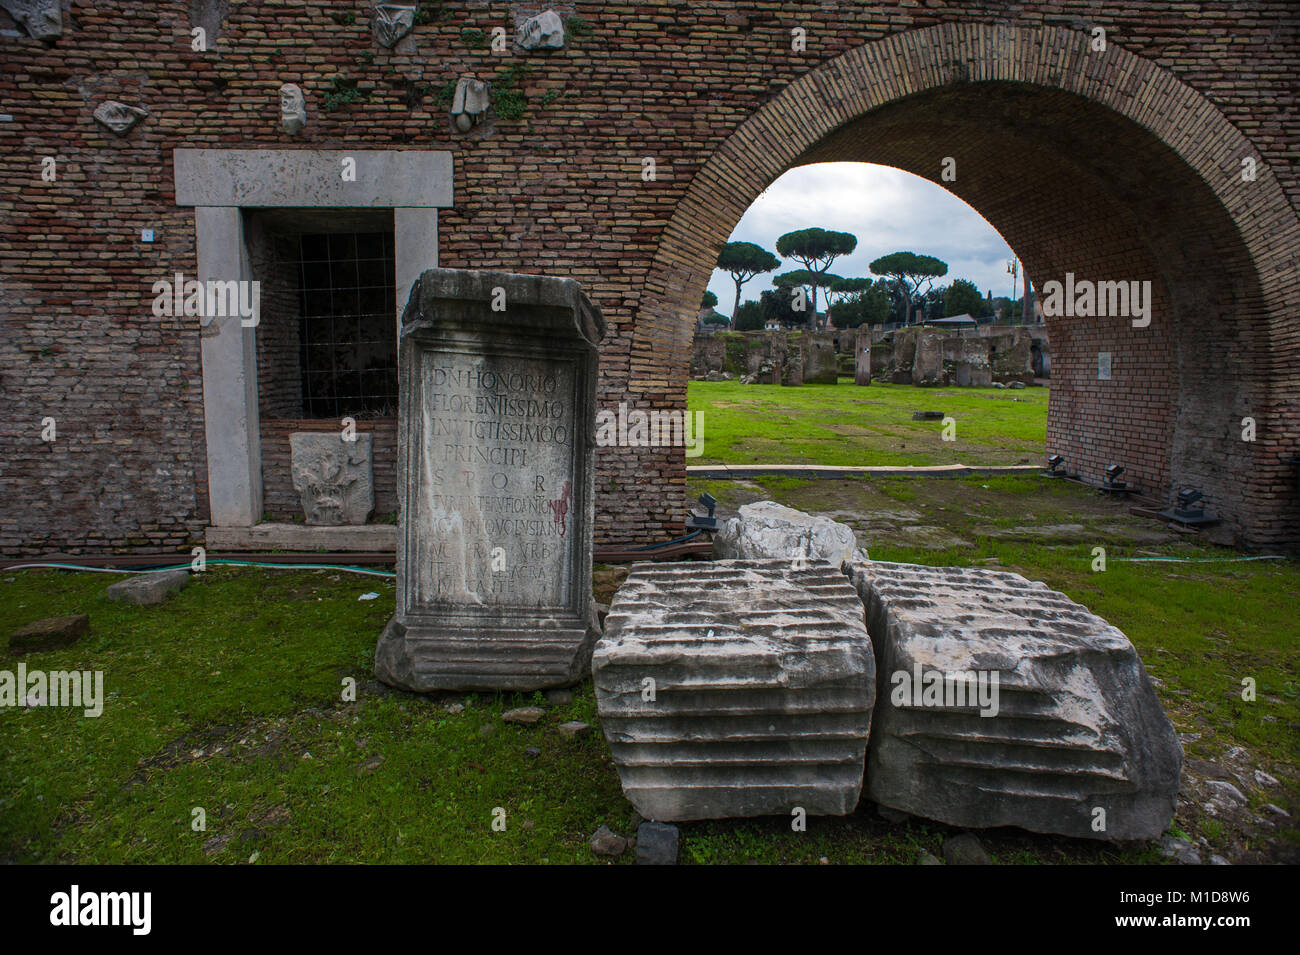 Rome, Italy. Forum of Trajan. Stock Photo